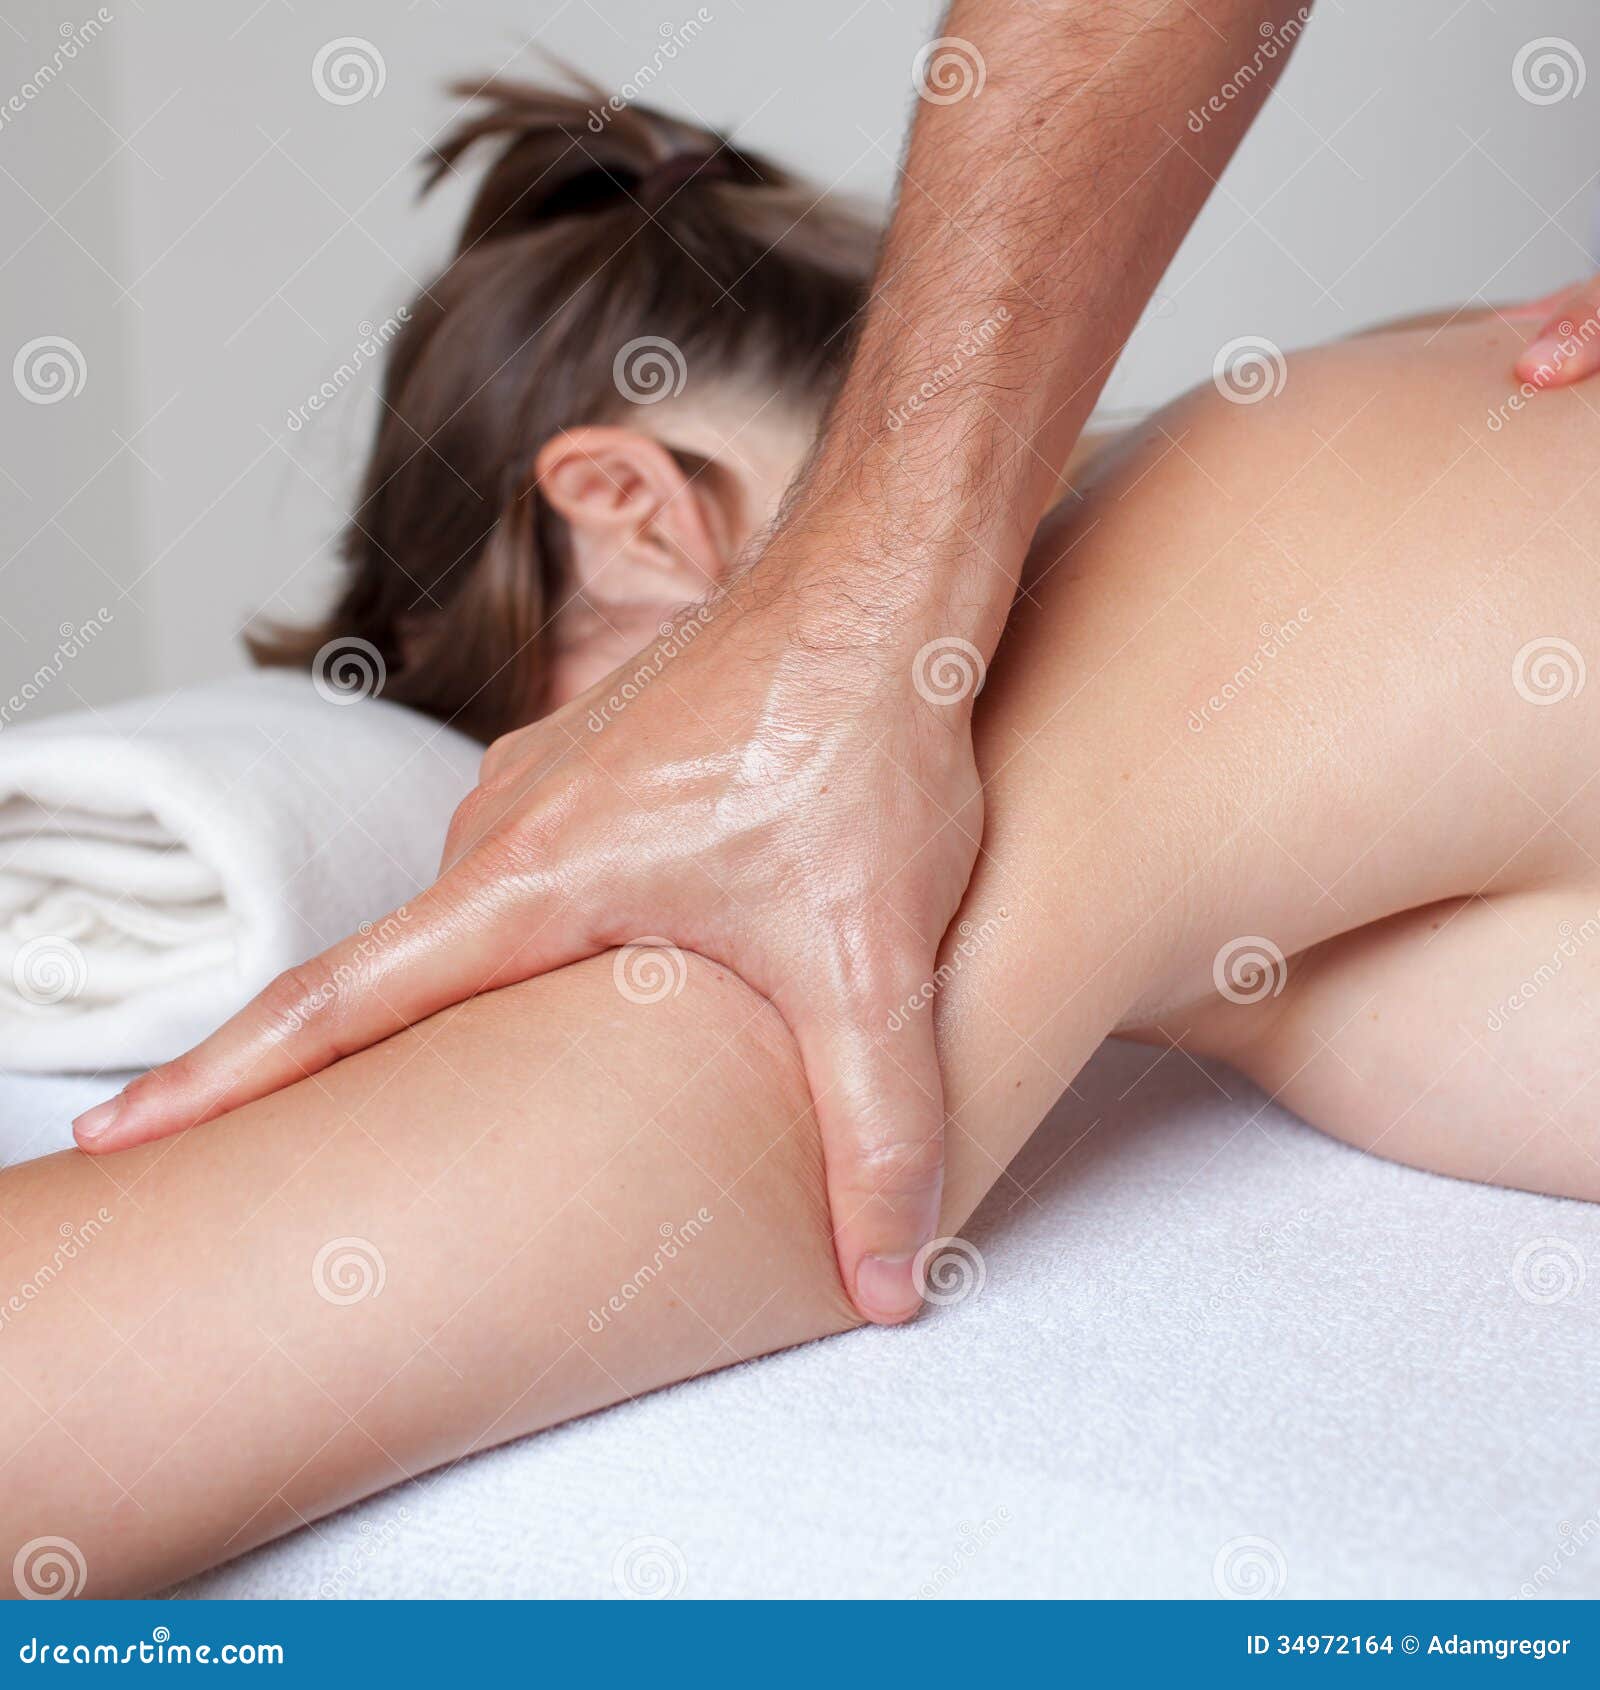 https://thumbs.dreamstime.com/z/arm-massage-female-upper-34972164.jpg